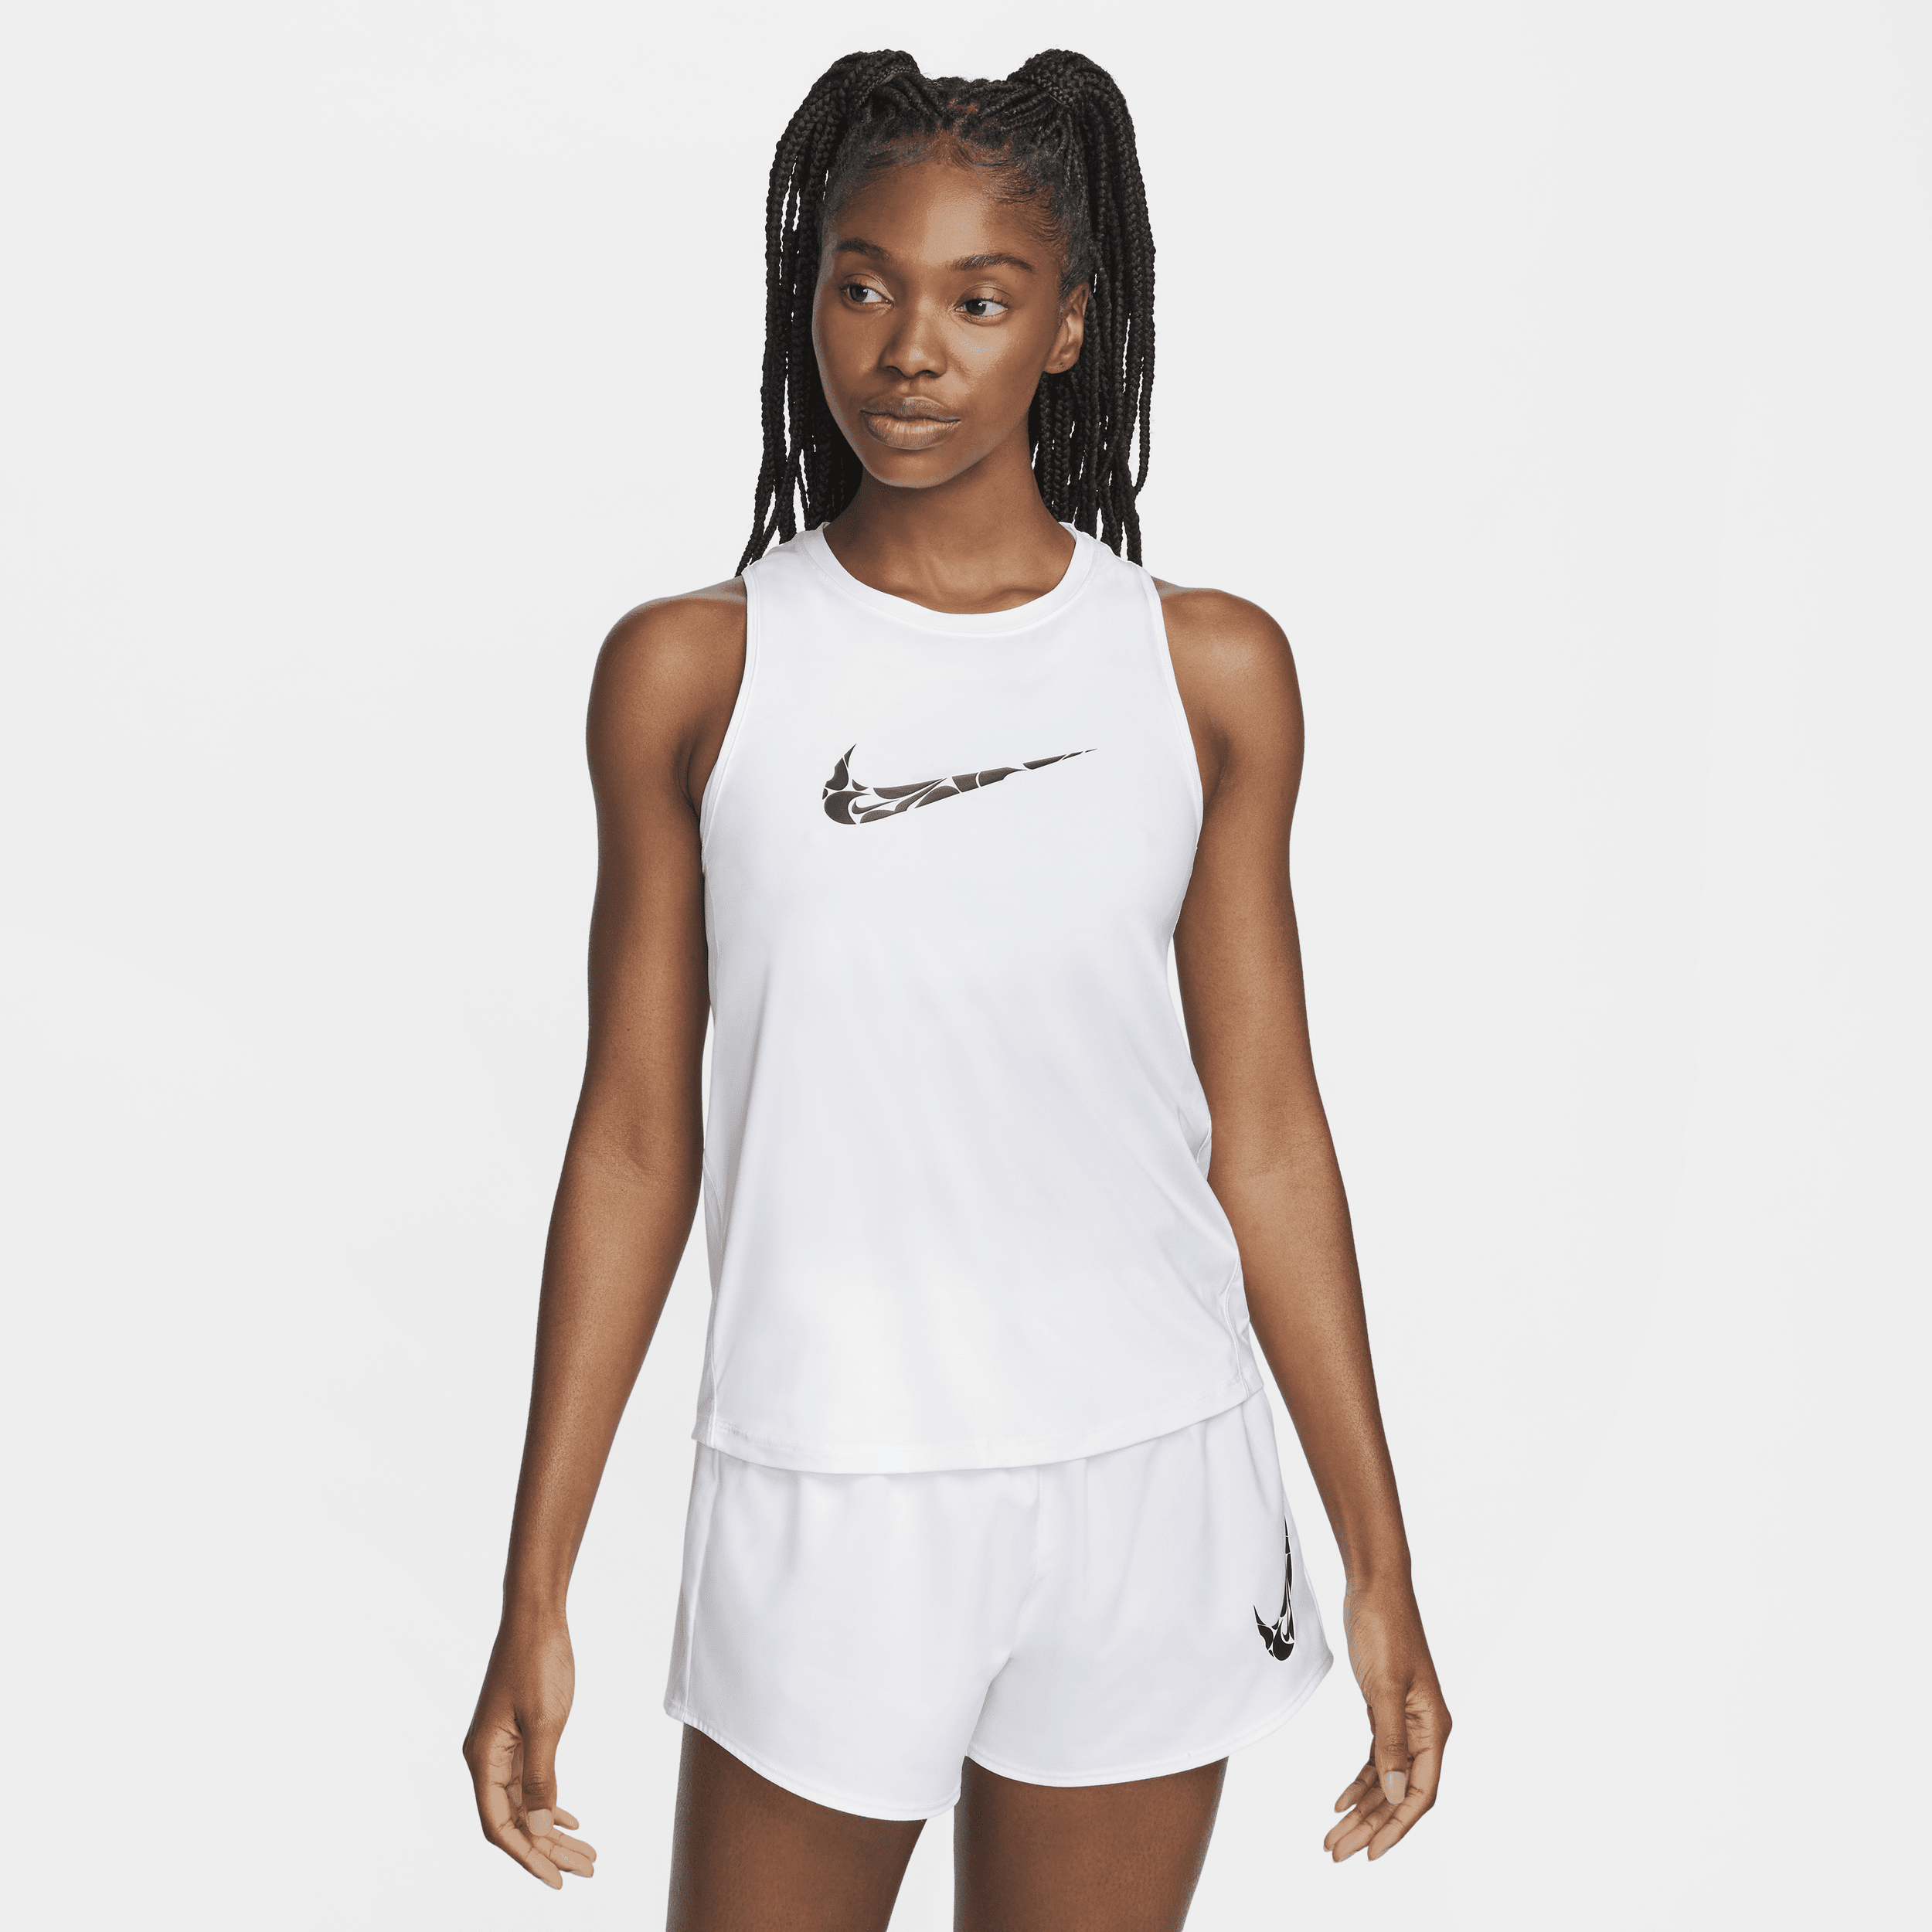 Nike One hardlooptanktop met graphic voor dames - Wit